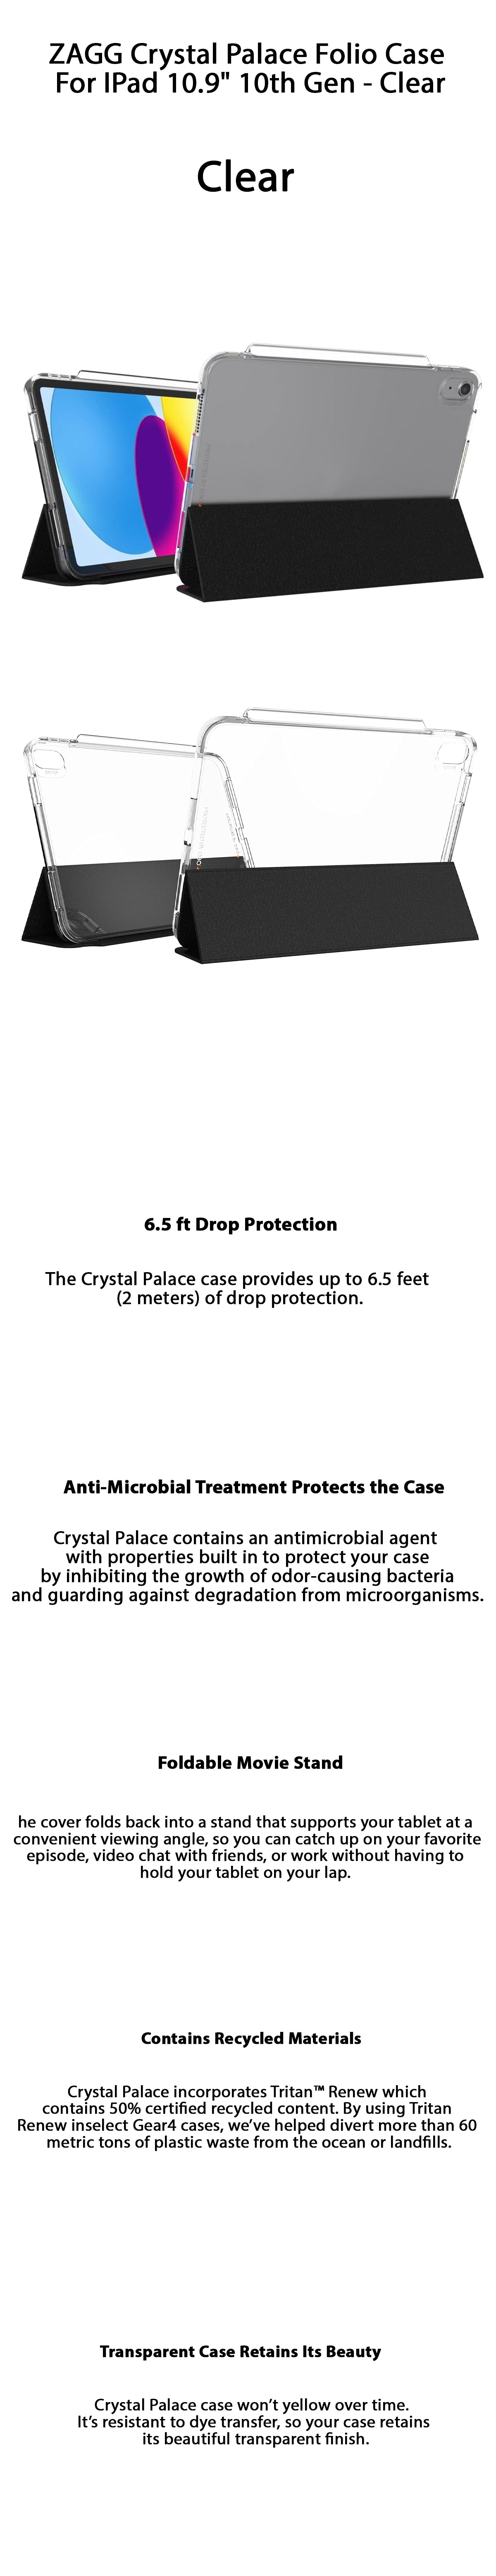 ZAGG Crystal Palace Folio Case For iPad 10th Gen 10.9